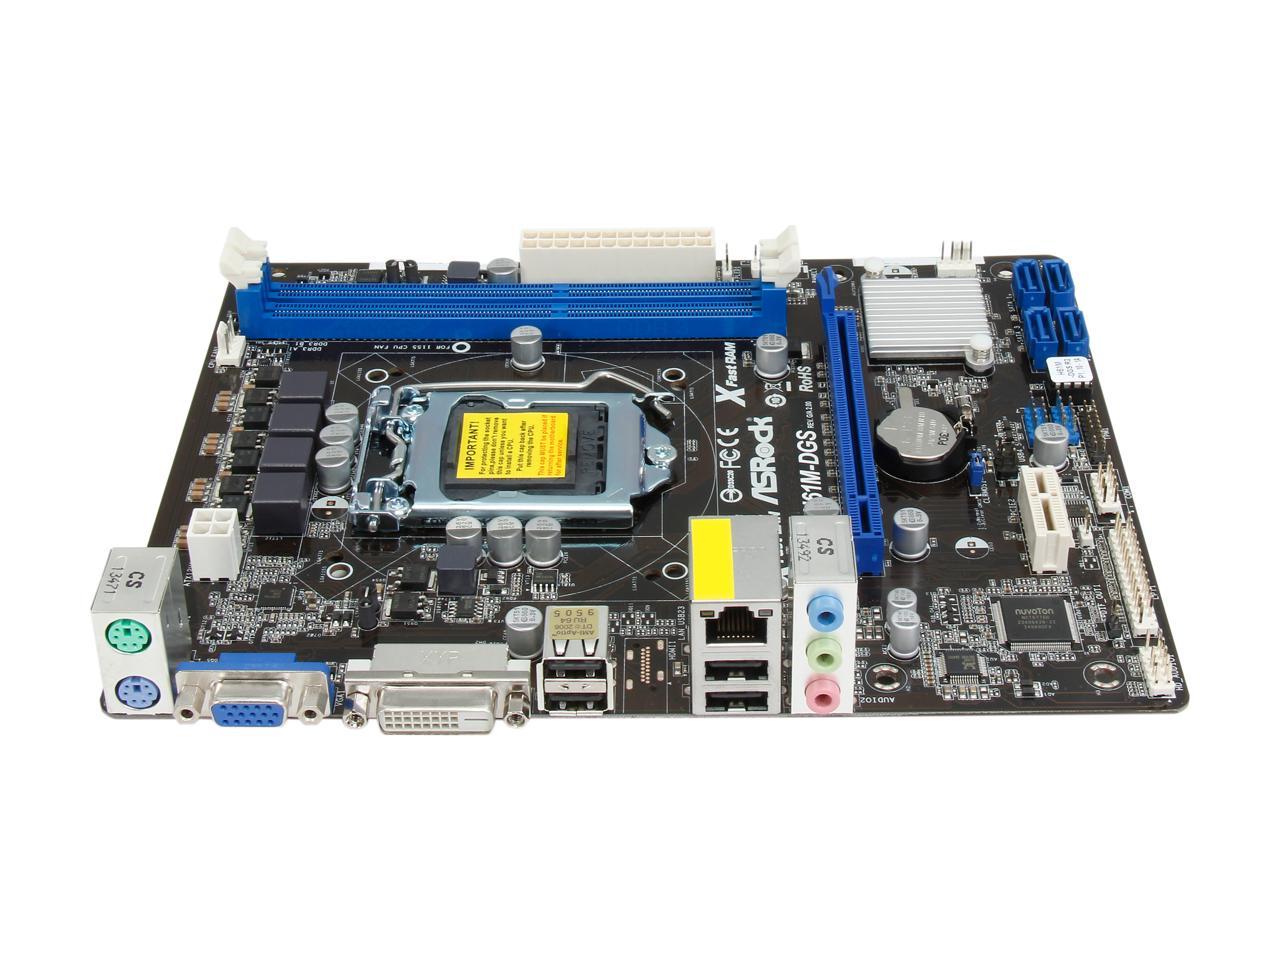 ASRock H61M-DGS R2.0 LGA 1155 Micro ATX Intel Motherboard - Newegg.com